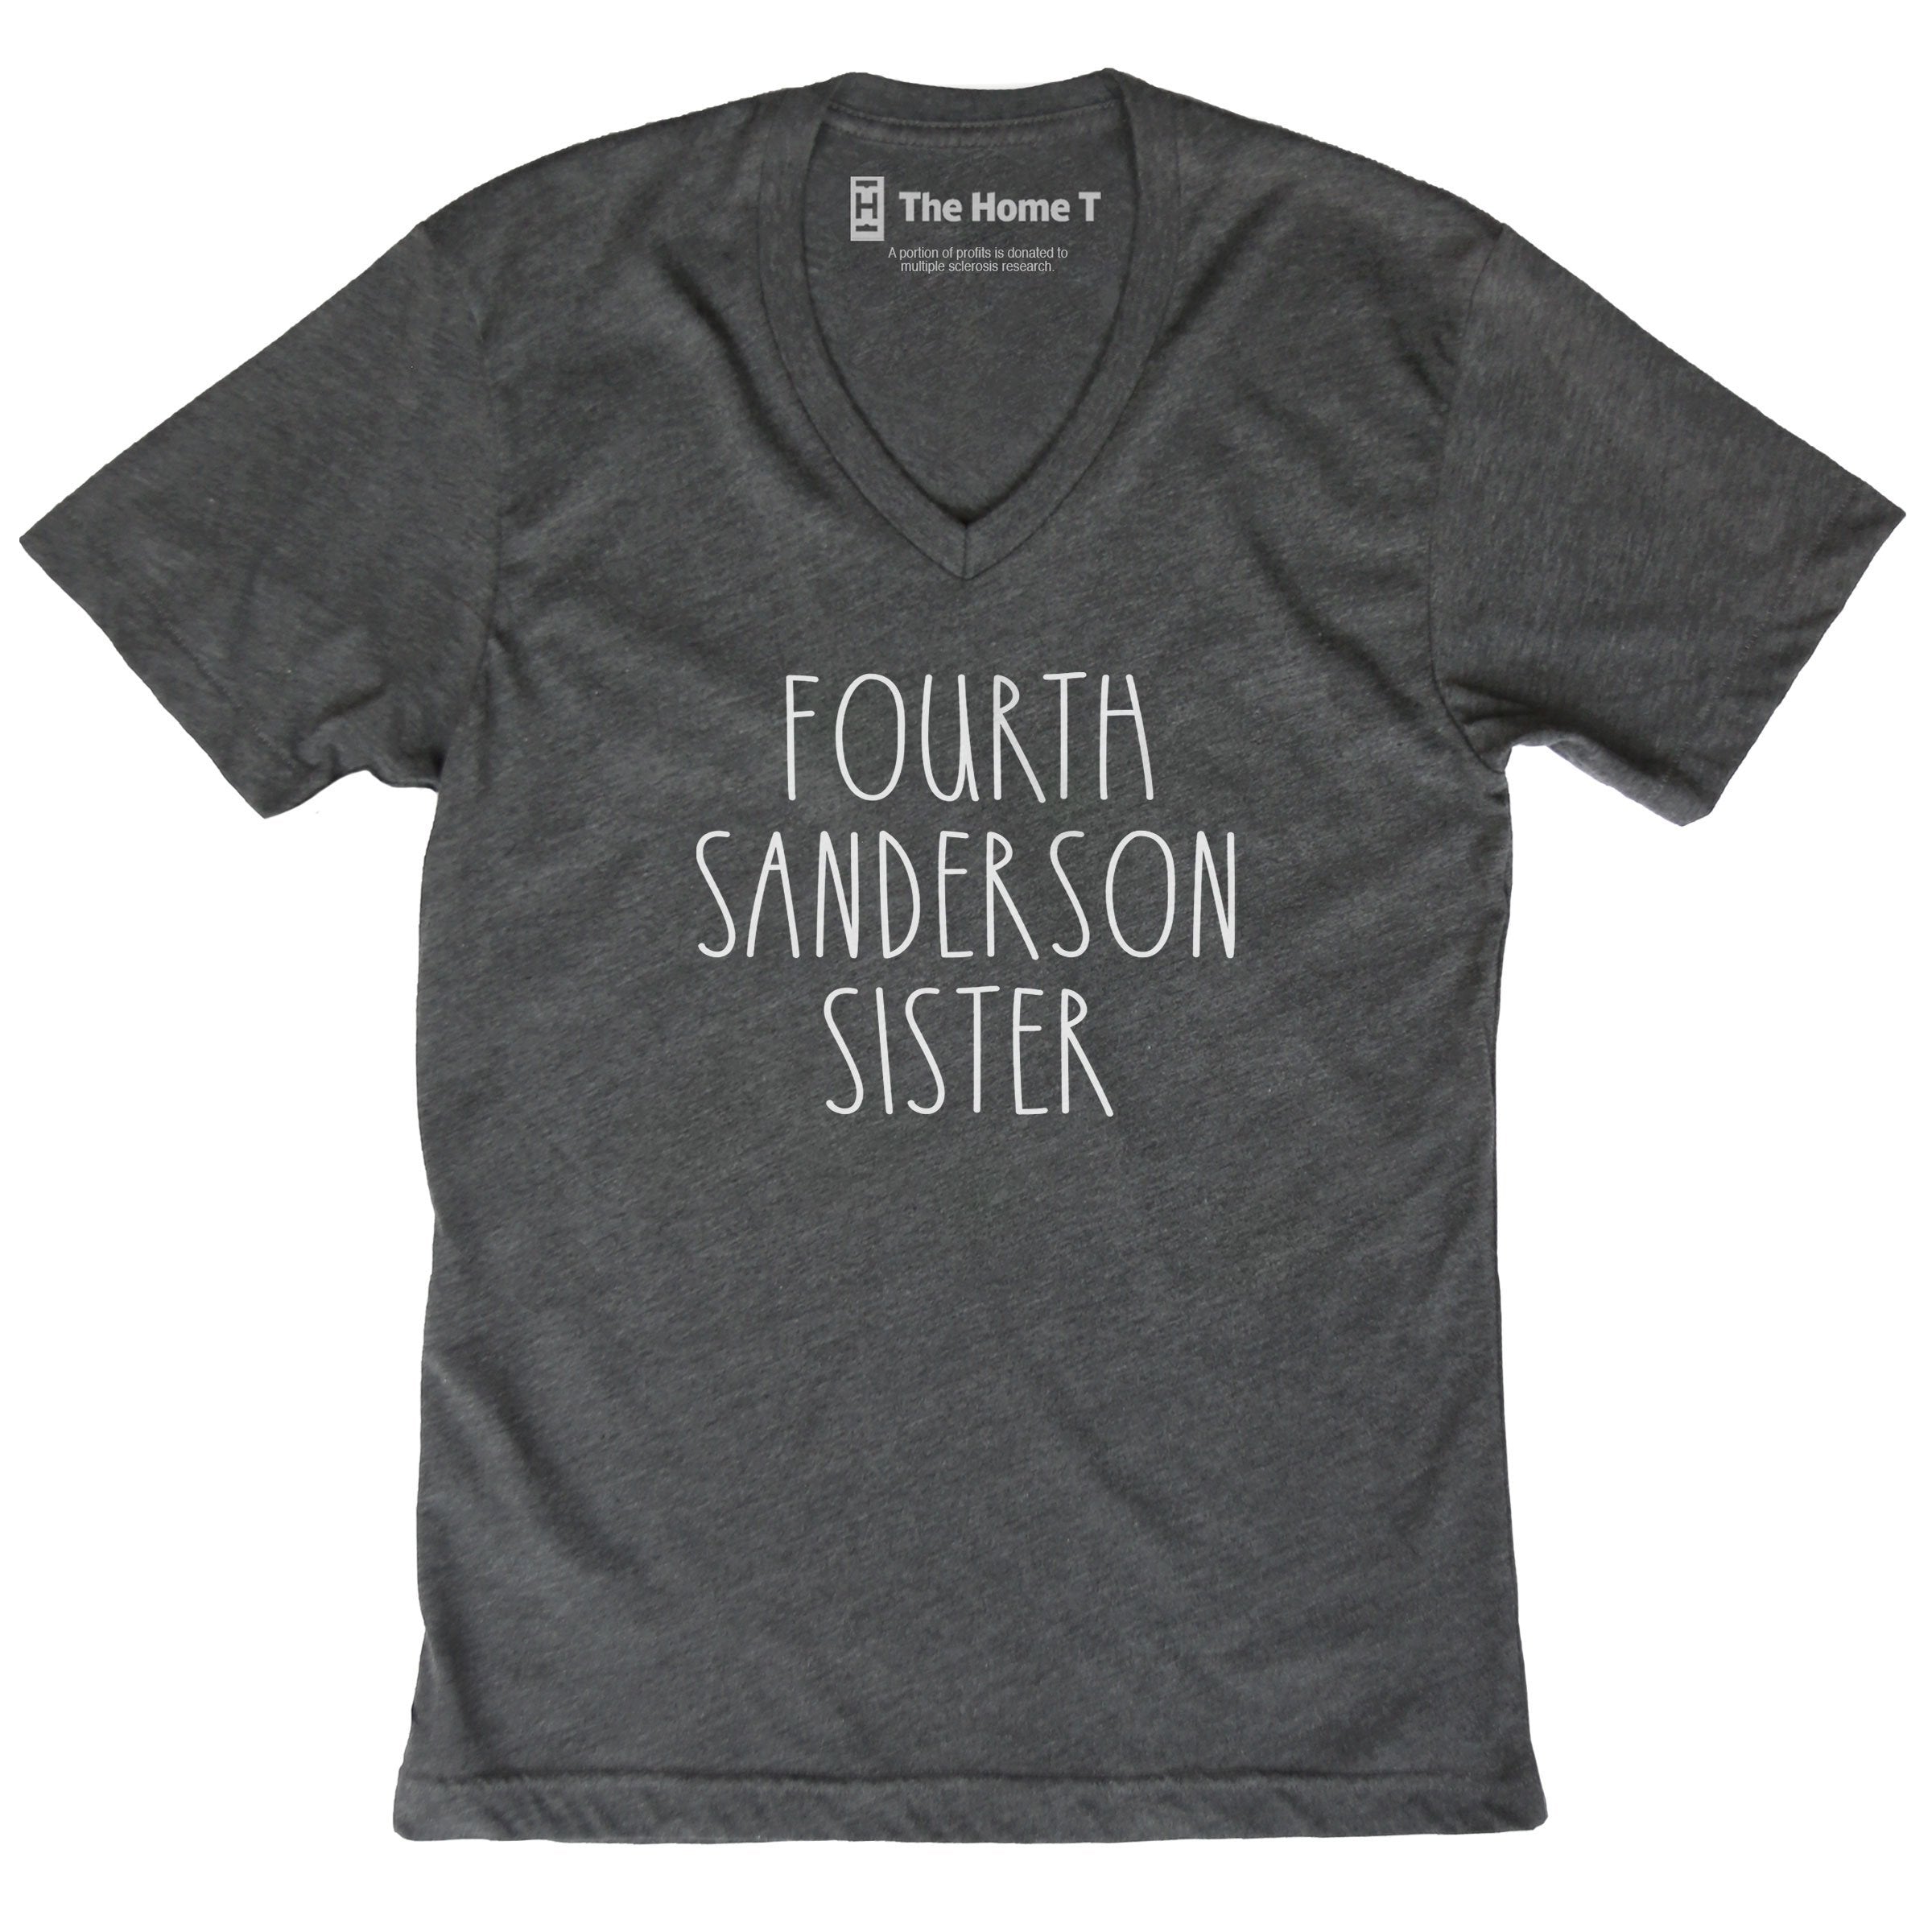 Sanderson Sister The Home T XS V-NECK